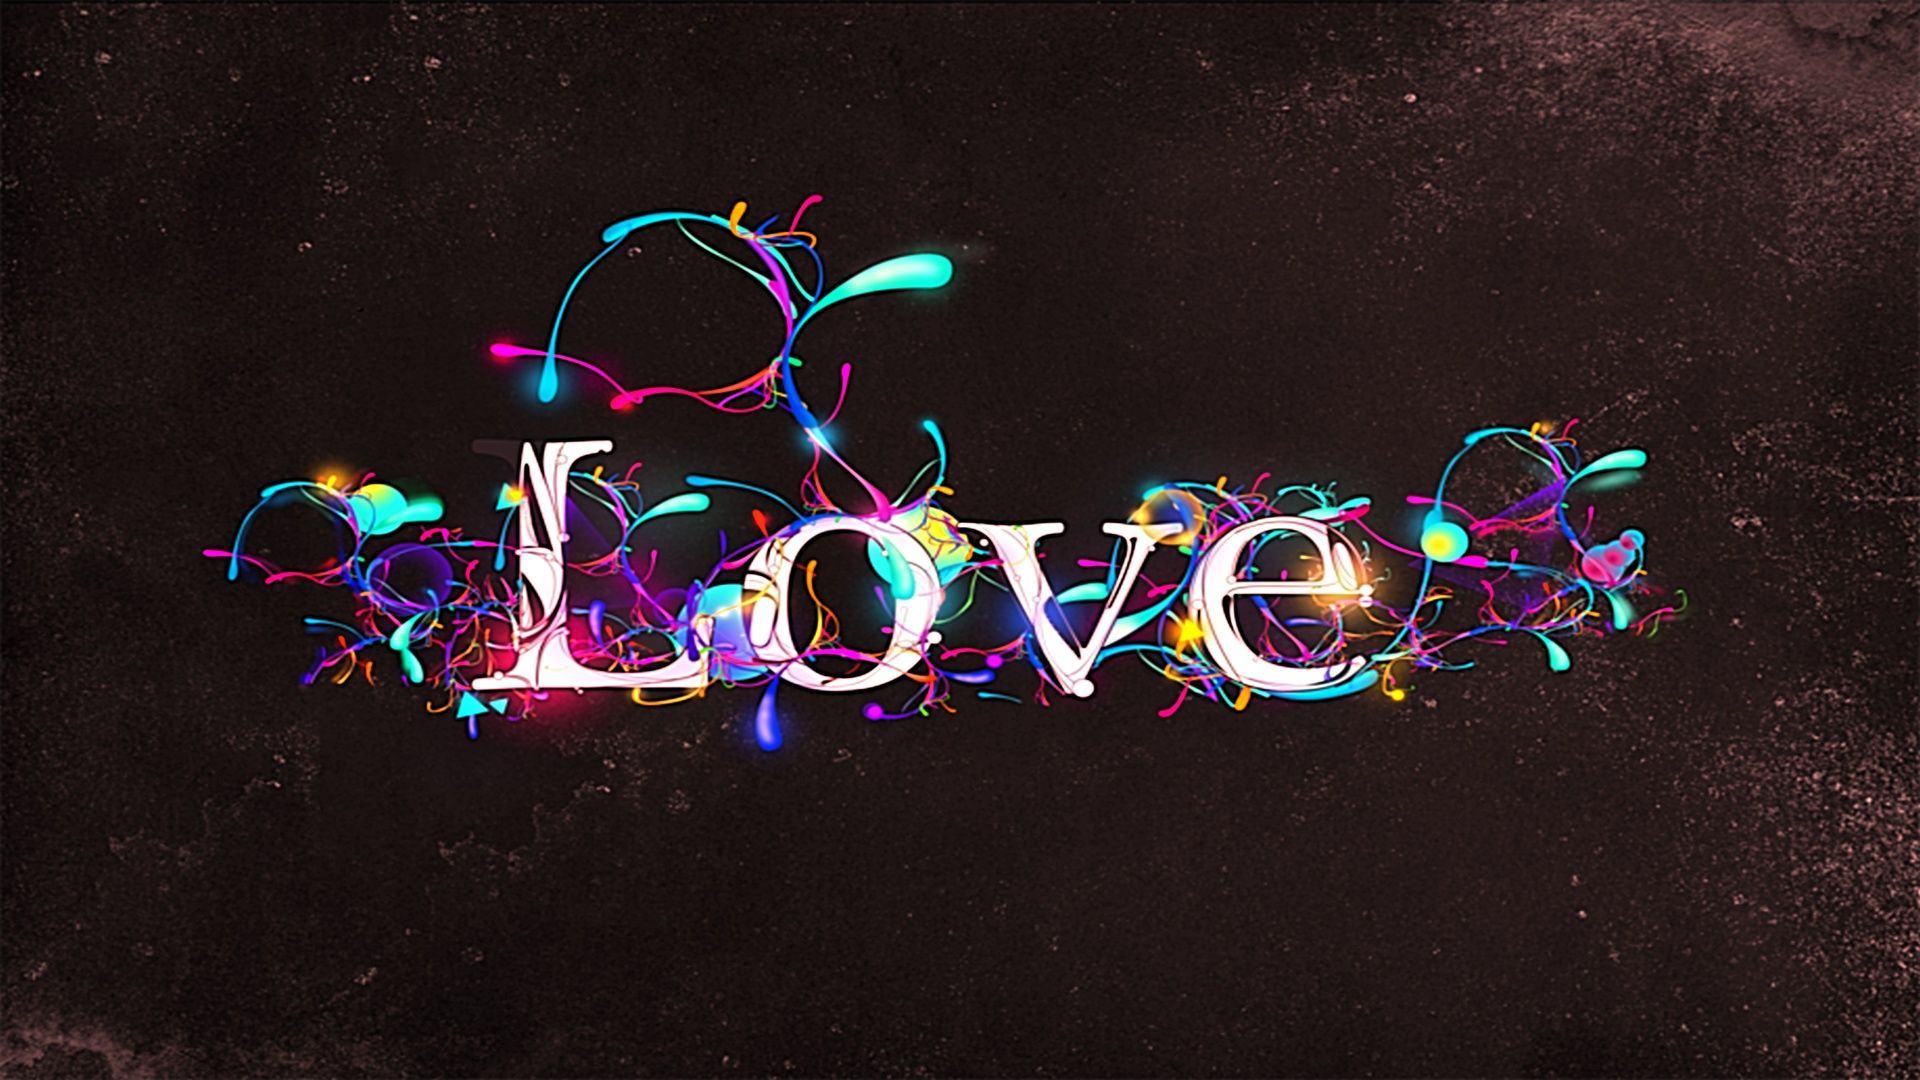 Parejas Computer Wallpaper, Desktop Backgroundx1080. Love wallpaper, Love text, HD love